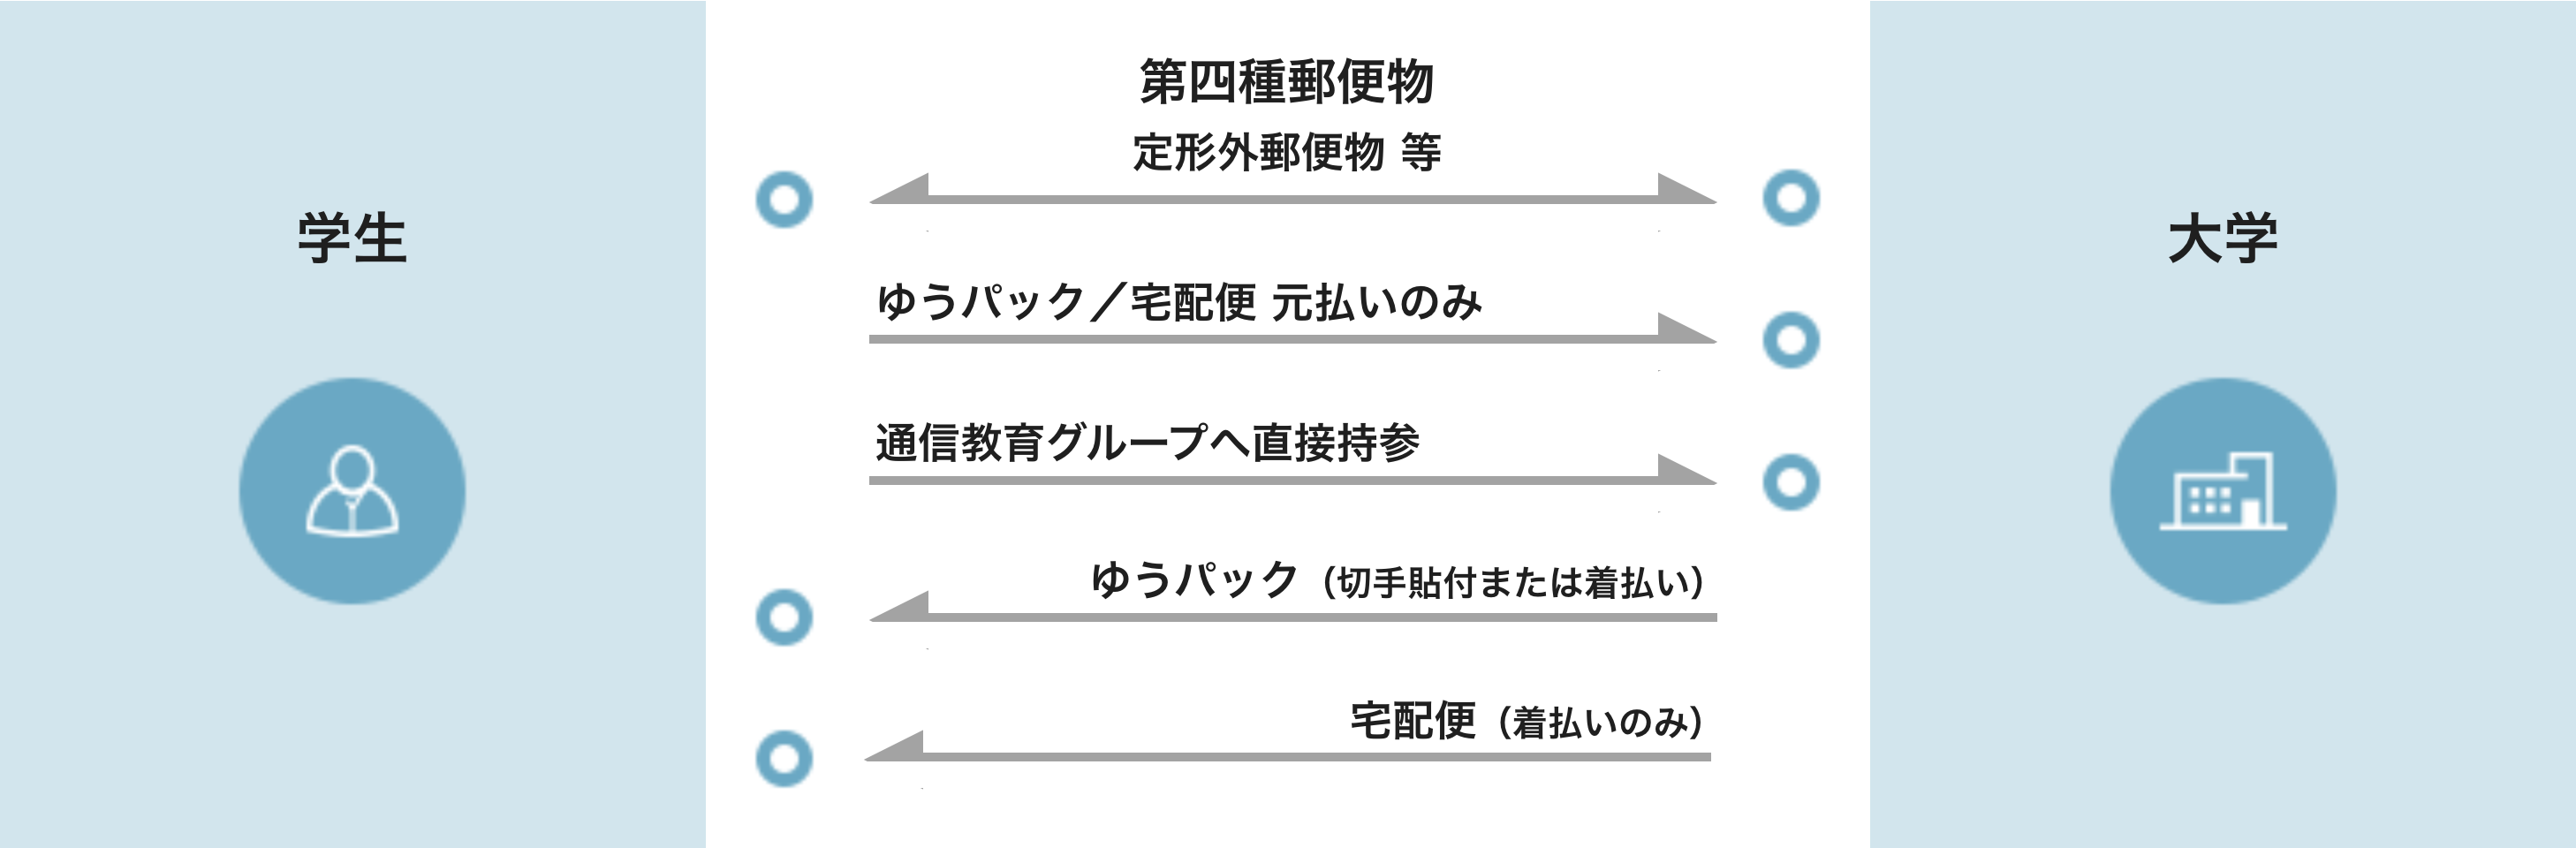 図：提出・返送方法の例